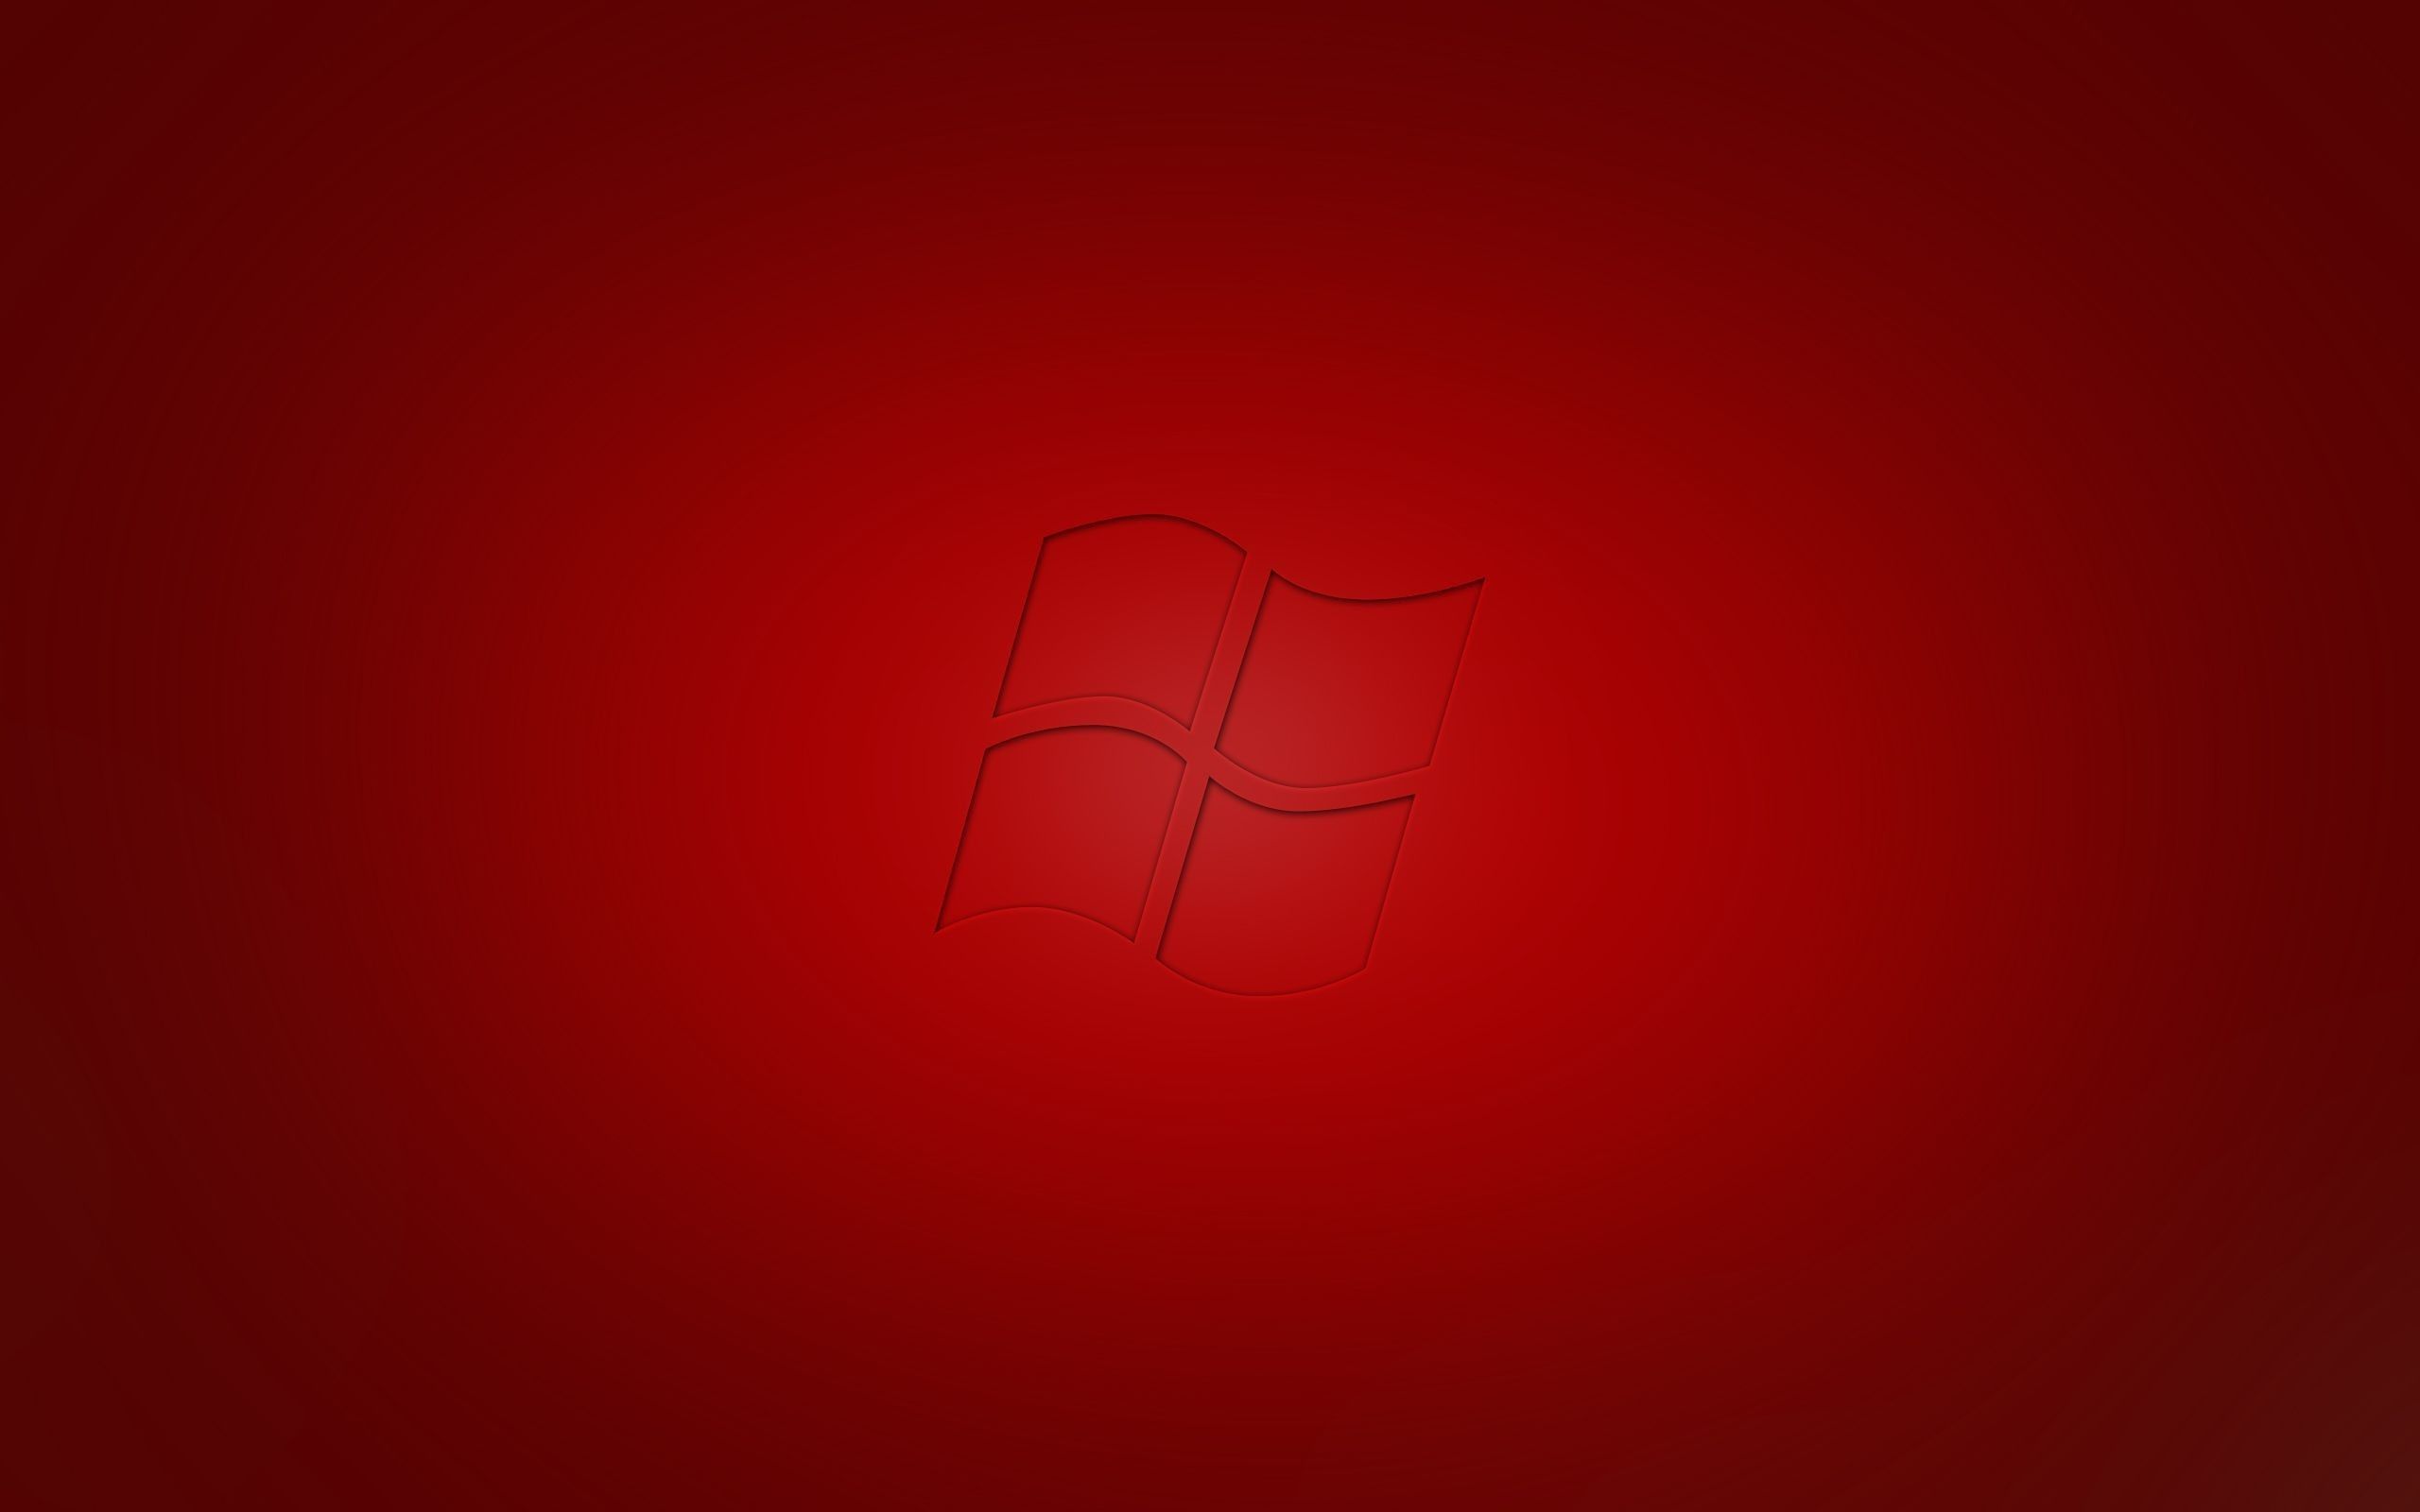 Microsoft windows 7 red wallpaper. Red windows, Red wallpaper, Microsoft windows